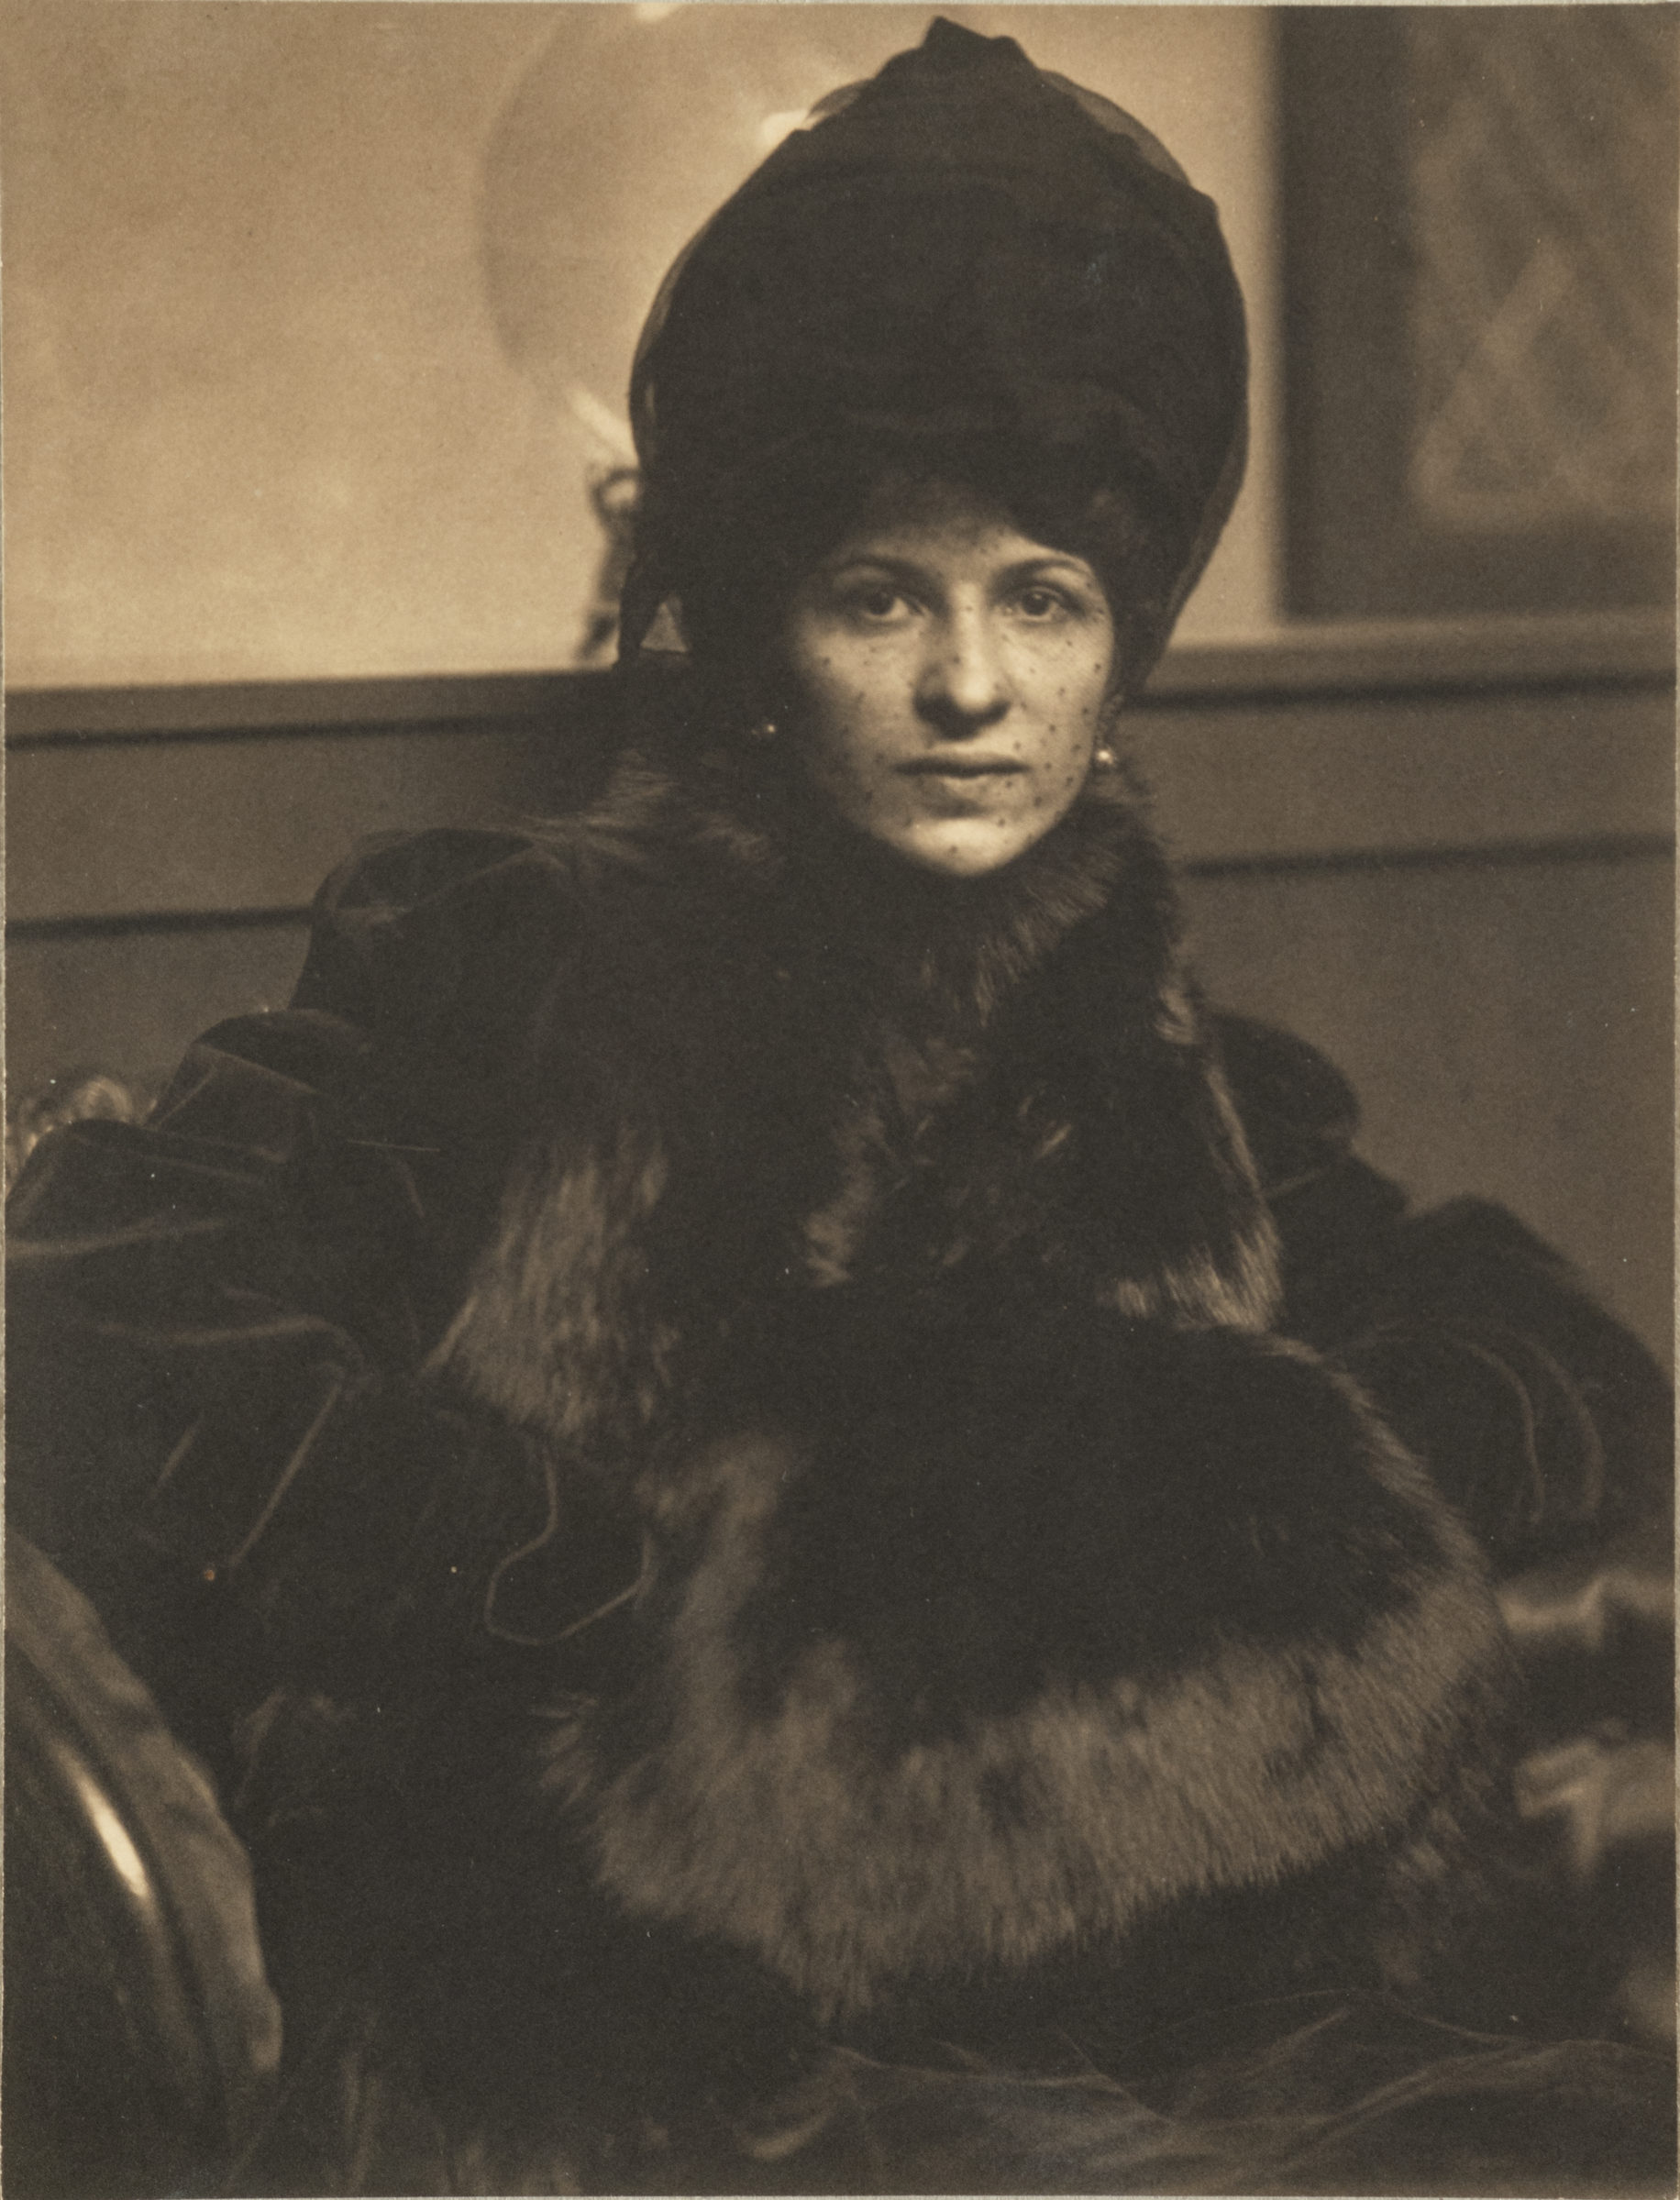 بورتريه يولابي ديكس by Gertrude Käsebier - حوالي 1910 - 7 7/8 x 6 إنش 